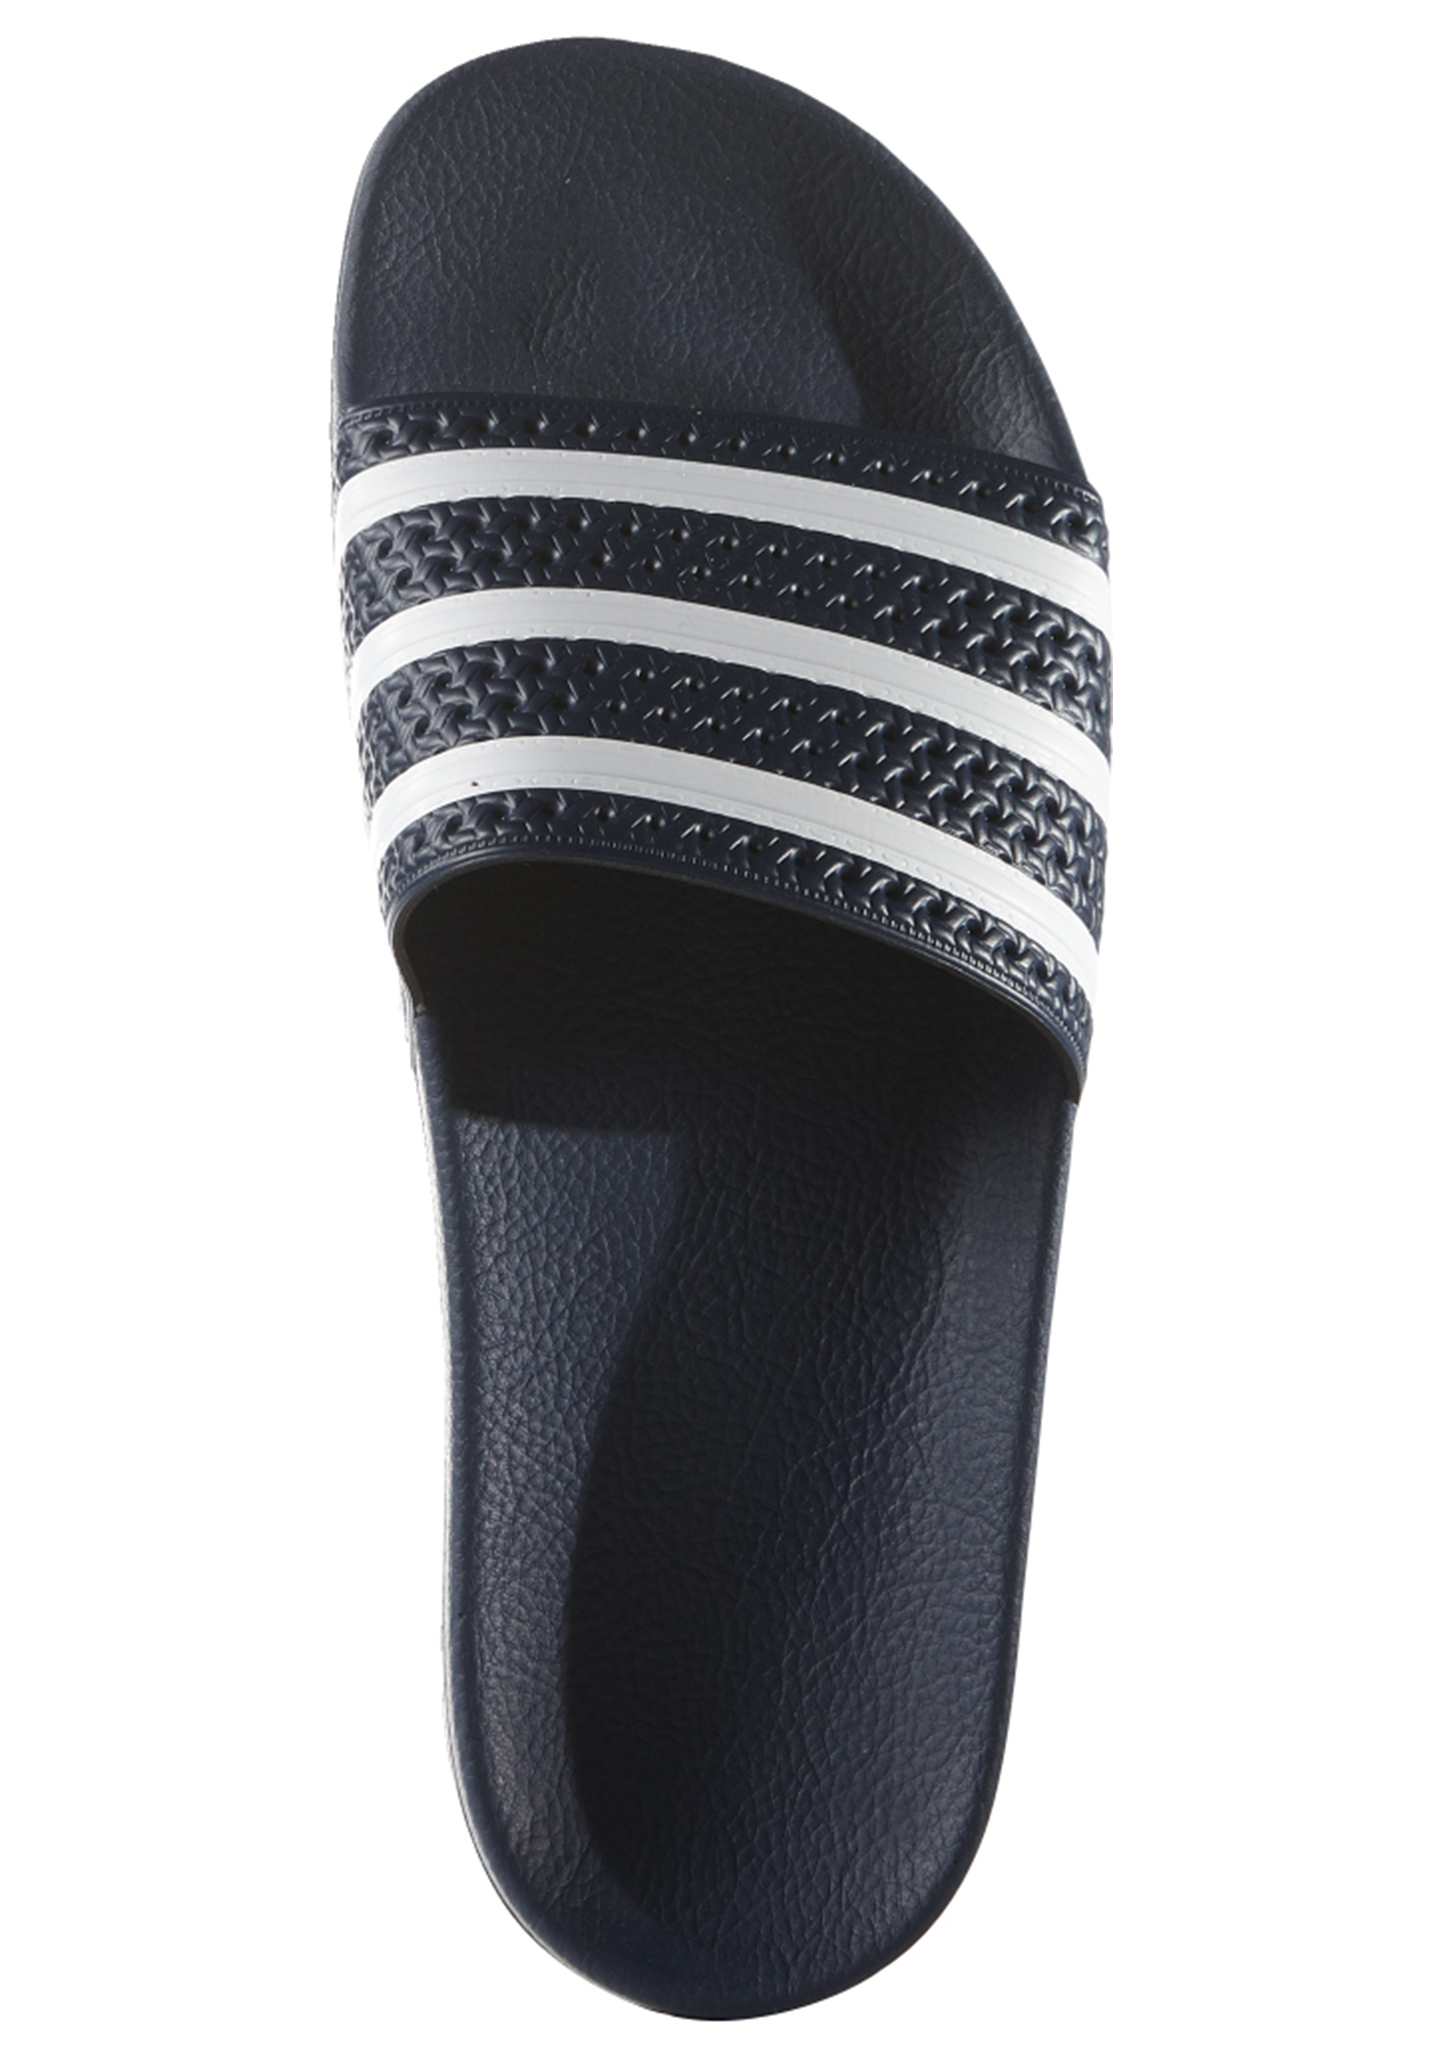 Adidas Originals ADIDAS ORIGINALS Adilette adiblue/white/adiblue 51 Strandsandalen / Flip-Flop / Thongs Pantoletten blue 42